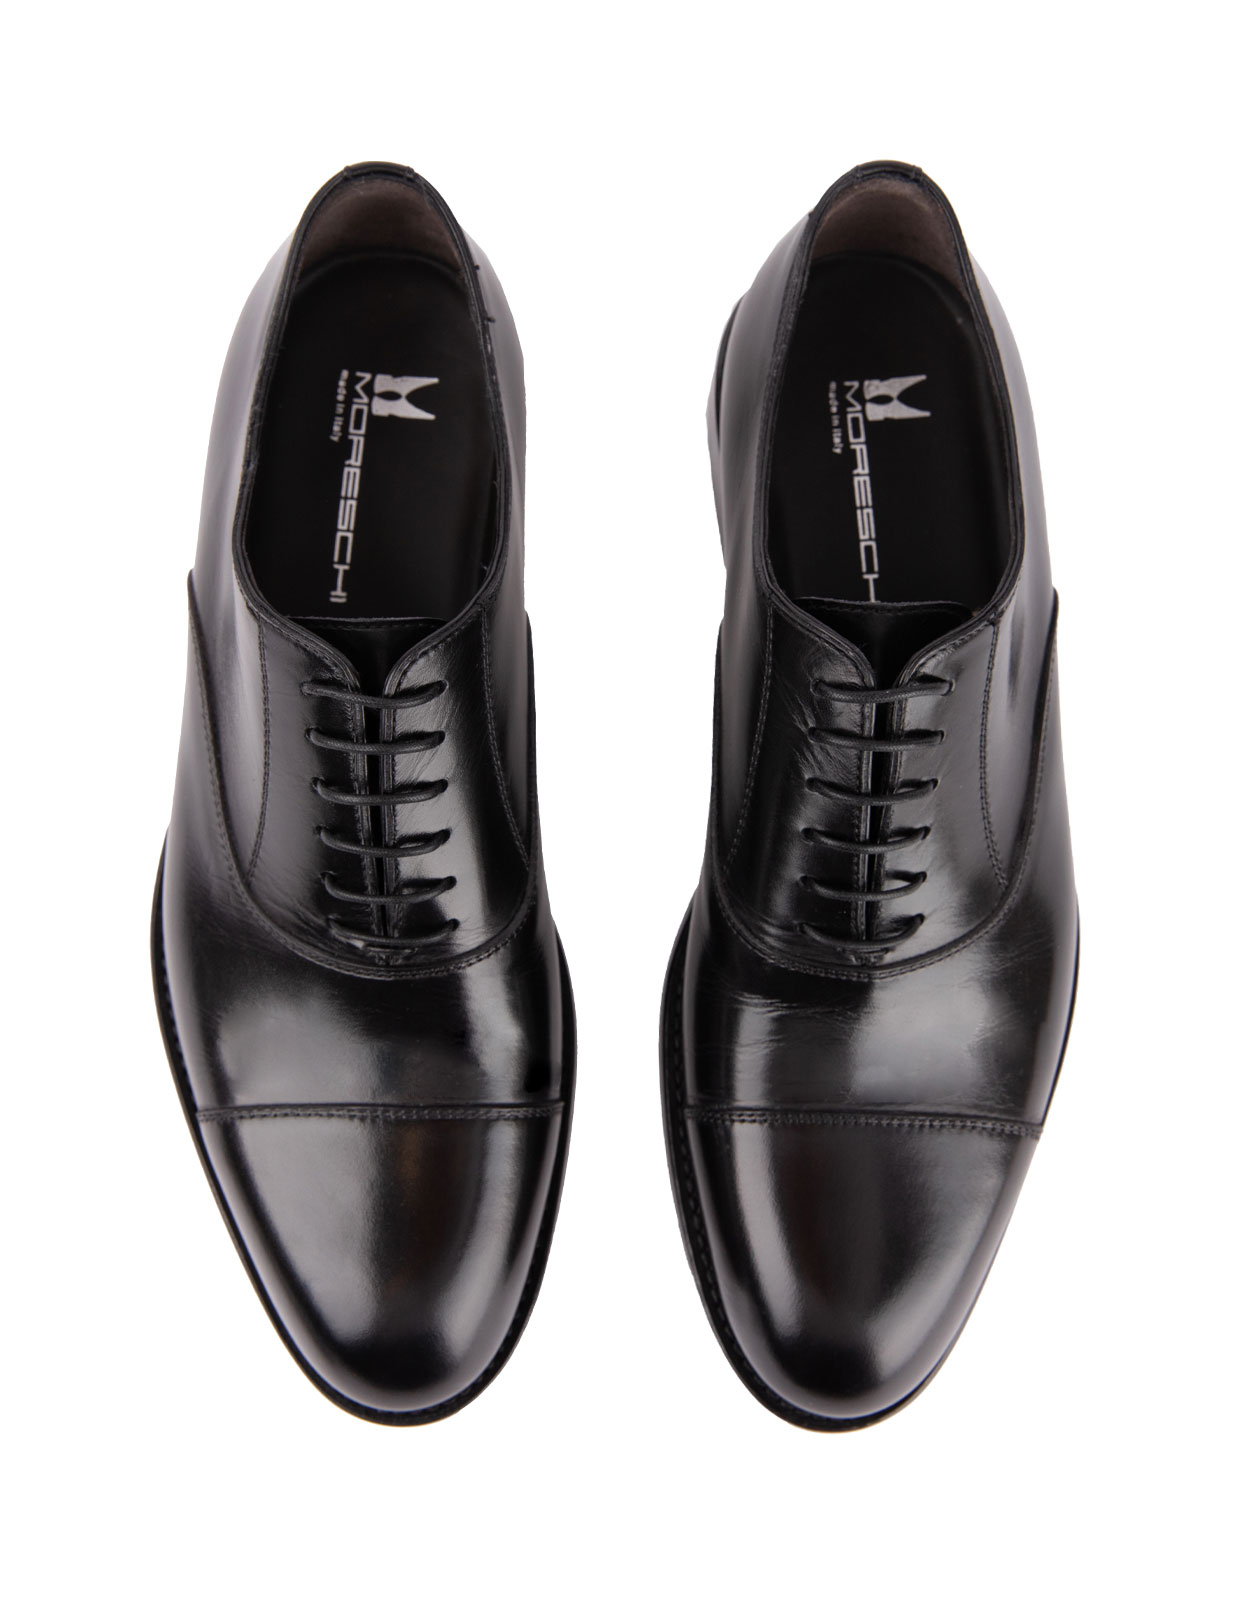 New York Oxford Shoes Calfskin Black Stl 6